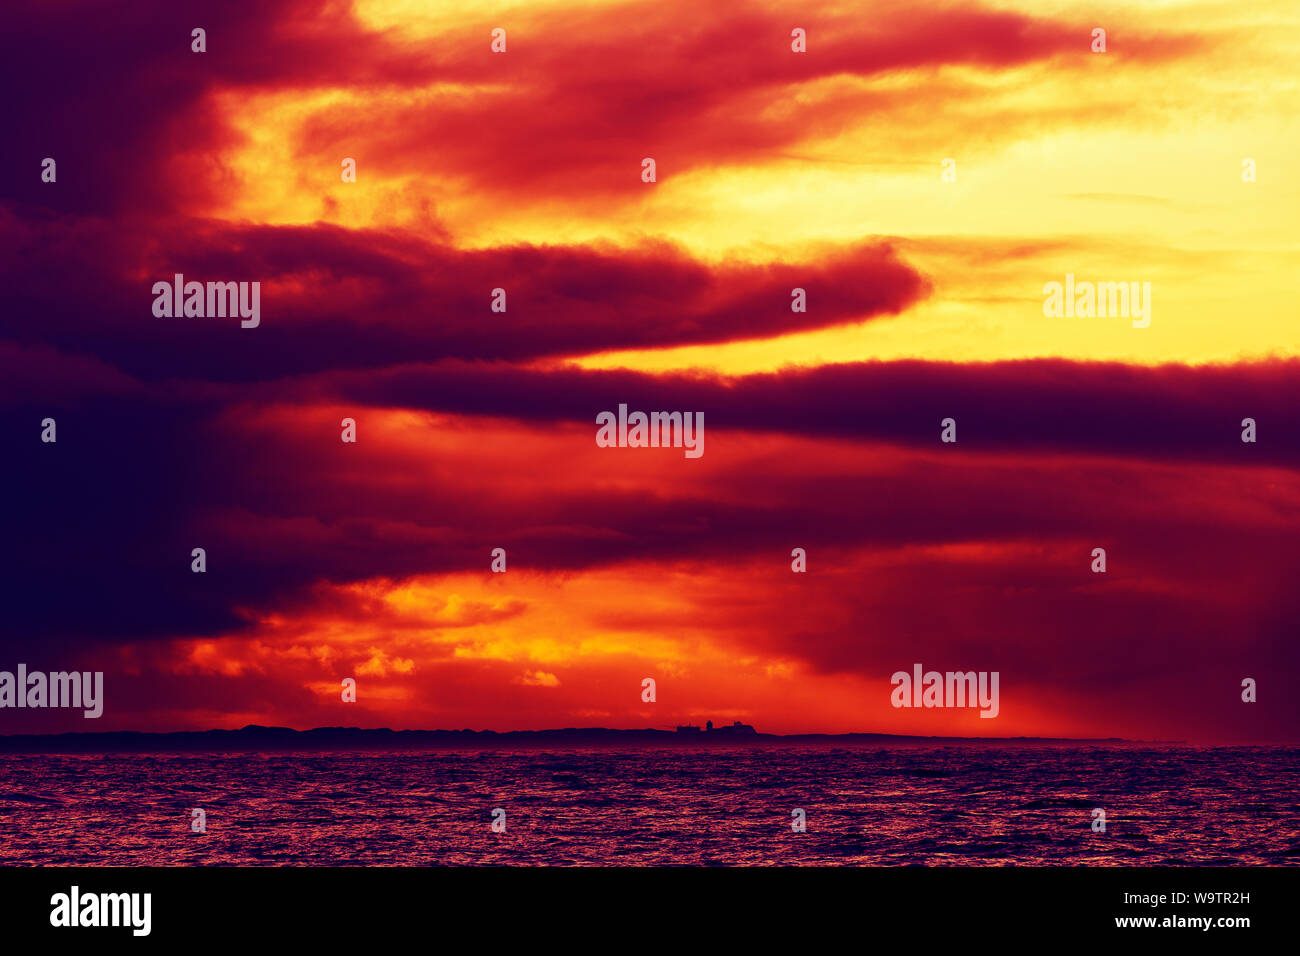 Norderney, Weststrand, Meer, Himmel, Wolken, Sonnenuntergang, Insel Juist, blaue Stunde Stock Photo